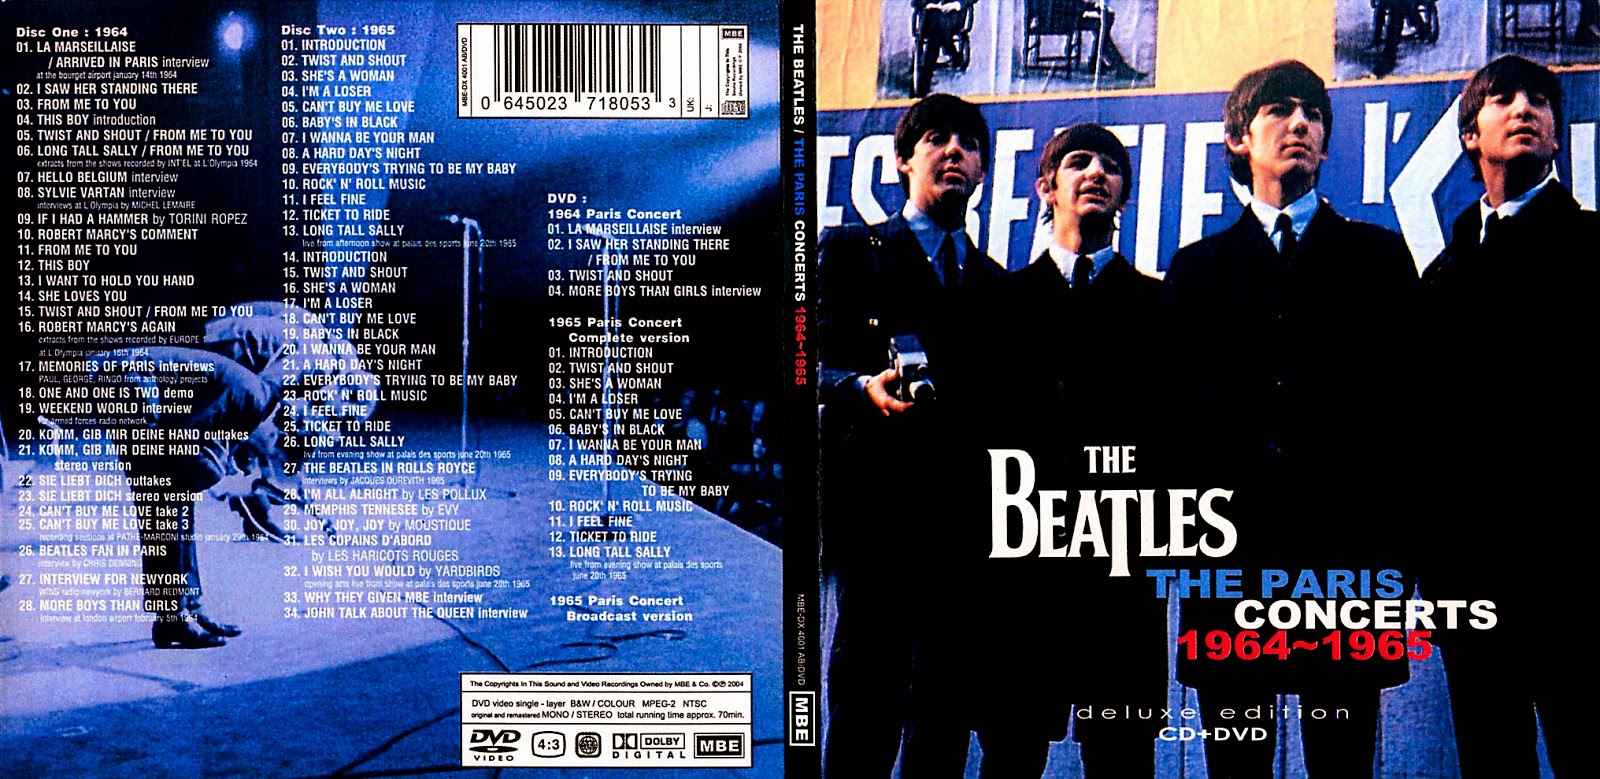 Mir deine. Битлз Komm GIB mir deine hand. Диск Beatles дискография. The Beatles Live in Paris 1965. The Beatles - a hard Day's Night CD.